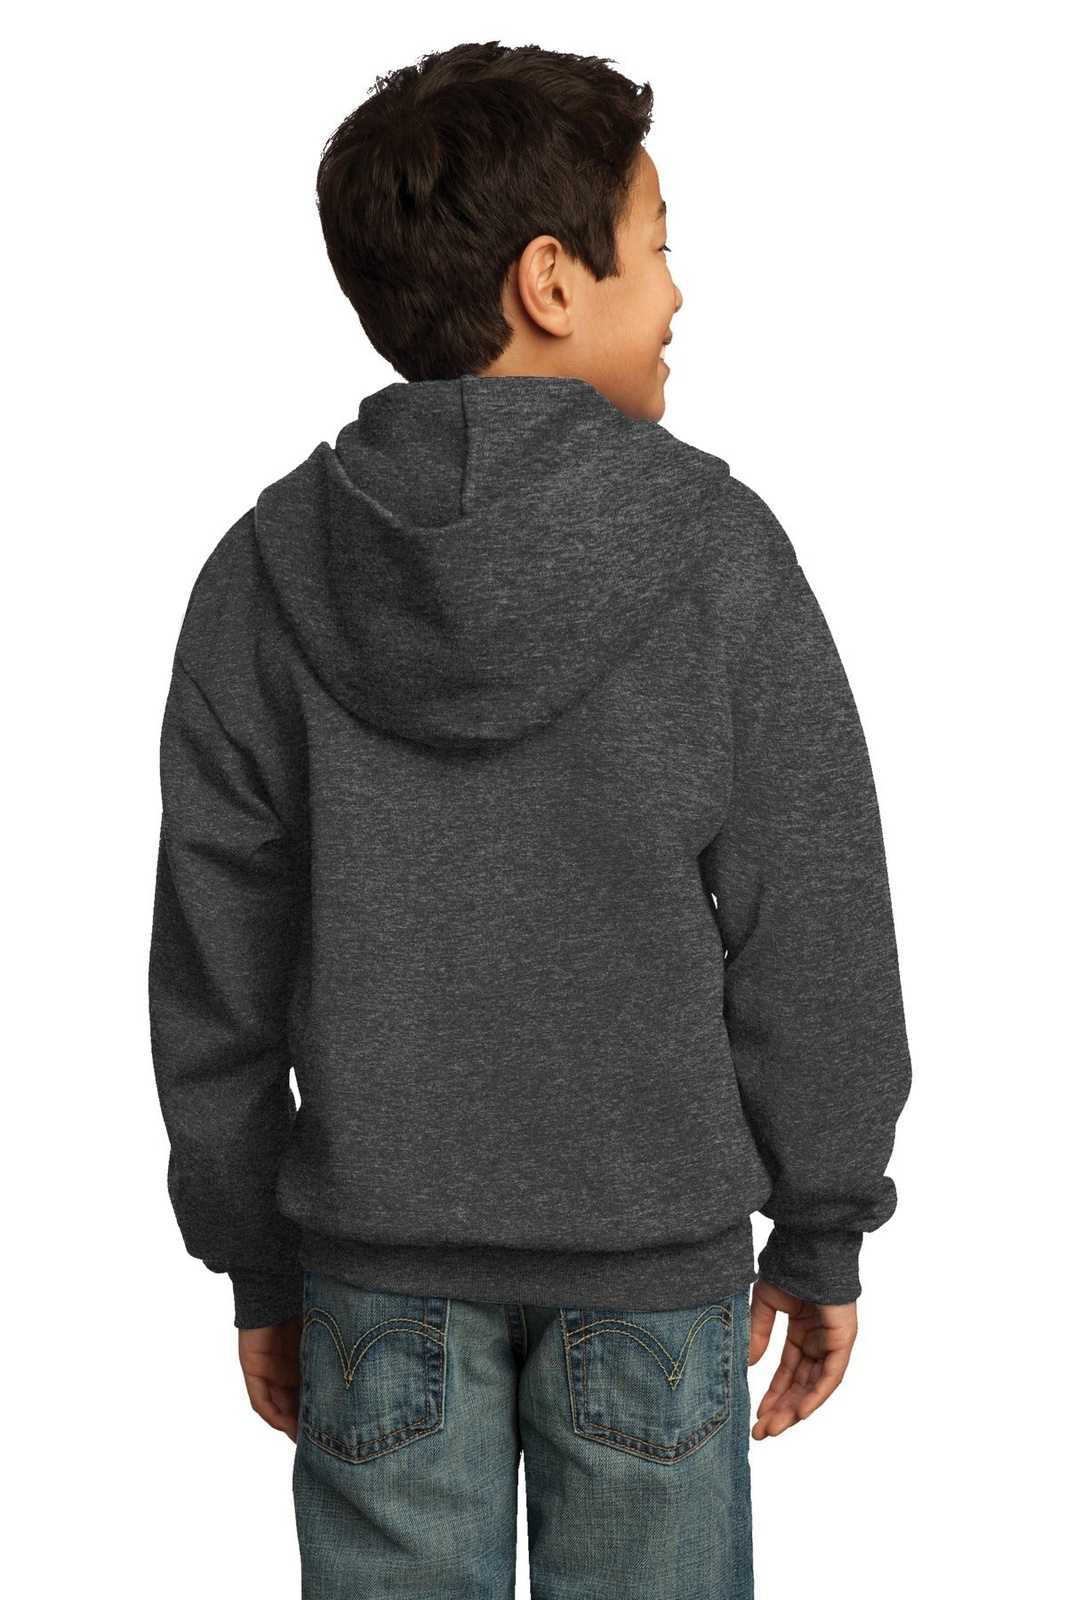 Port & Company PC90YZH Youth Core Fleece Full-Zip Hooded Sweatshirt - Dark Heather Gray - HIT a Double - 1